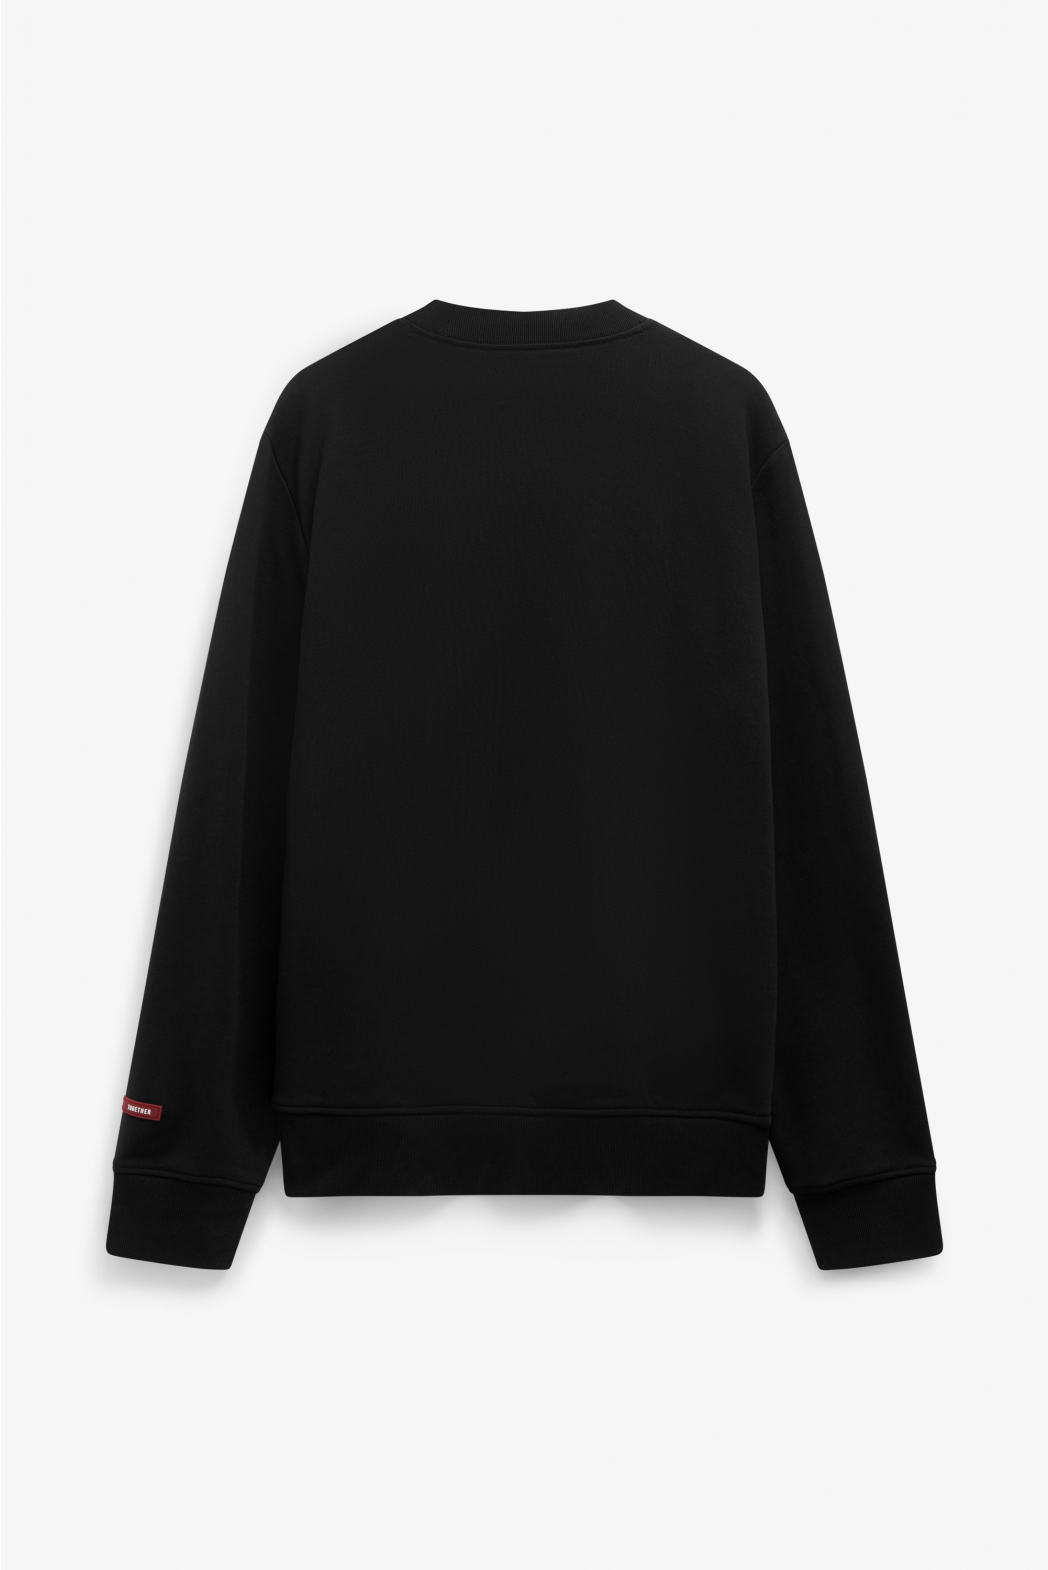 Áo Sweater ROUTINE Nam Basic Cổ Tròn Nhãn Trang Trí Form Regular - 10F23SWE001 | LASTORE MENSWEAR